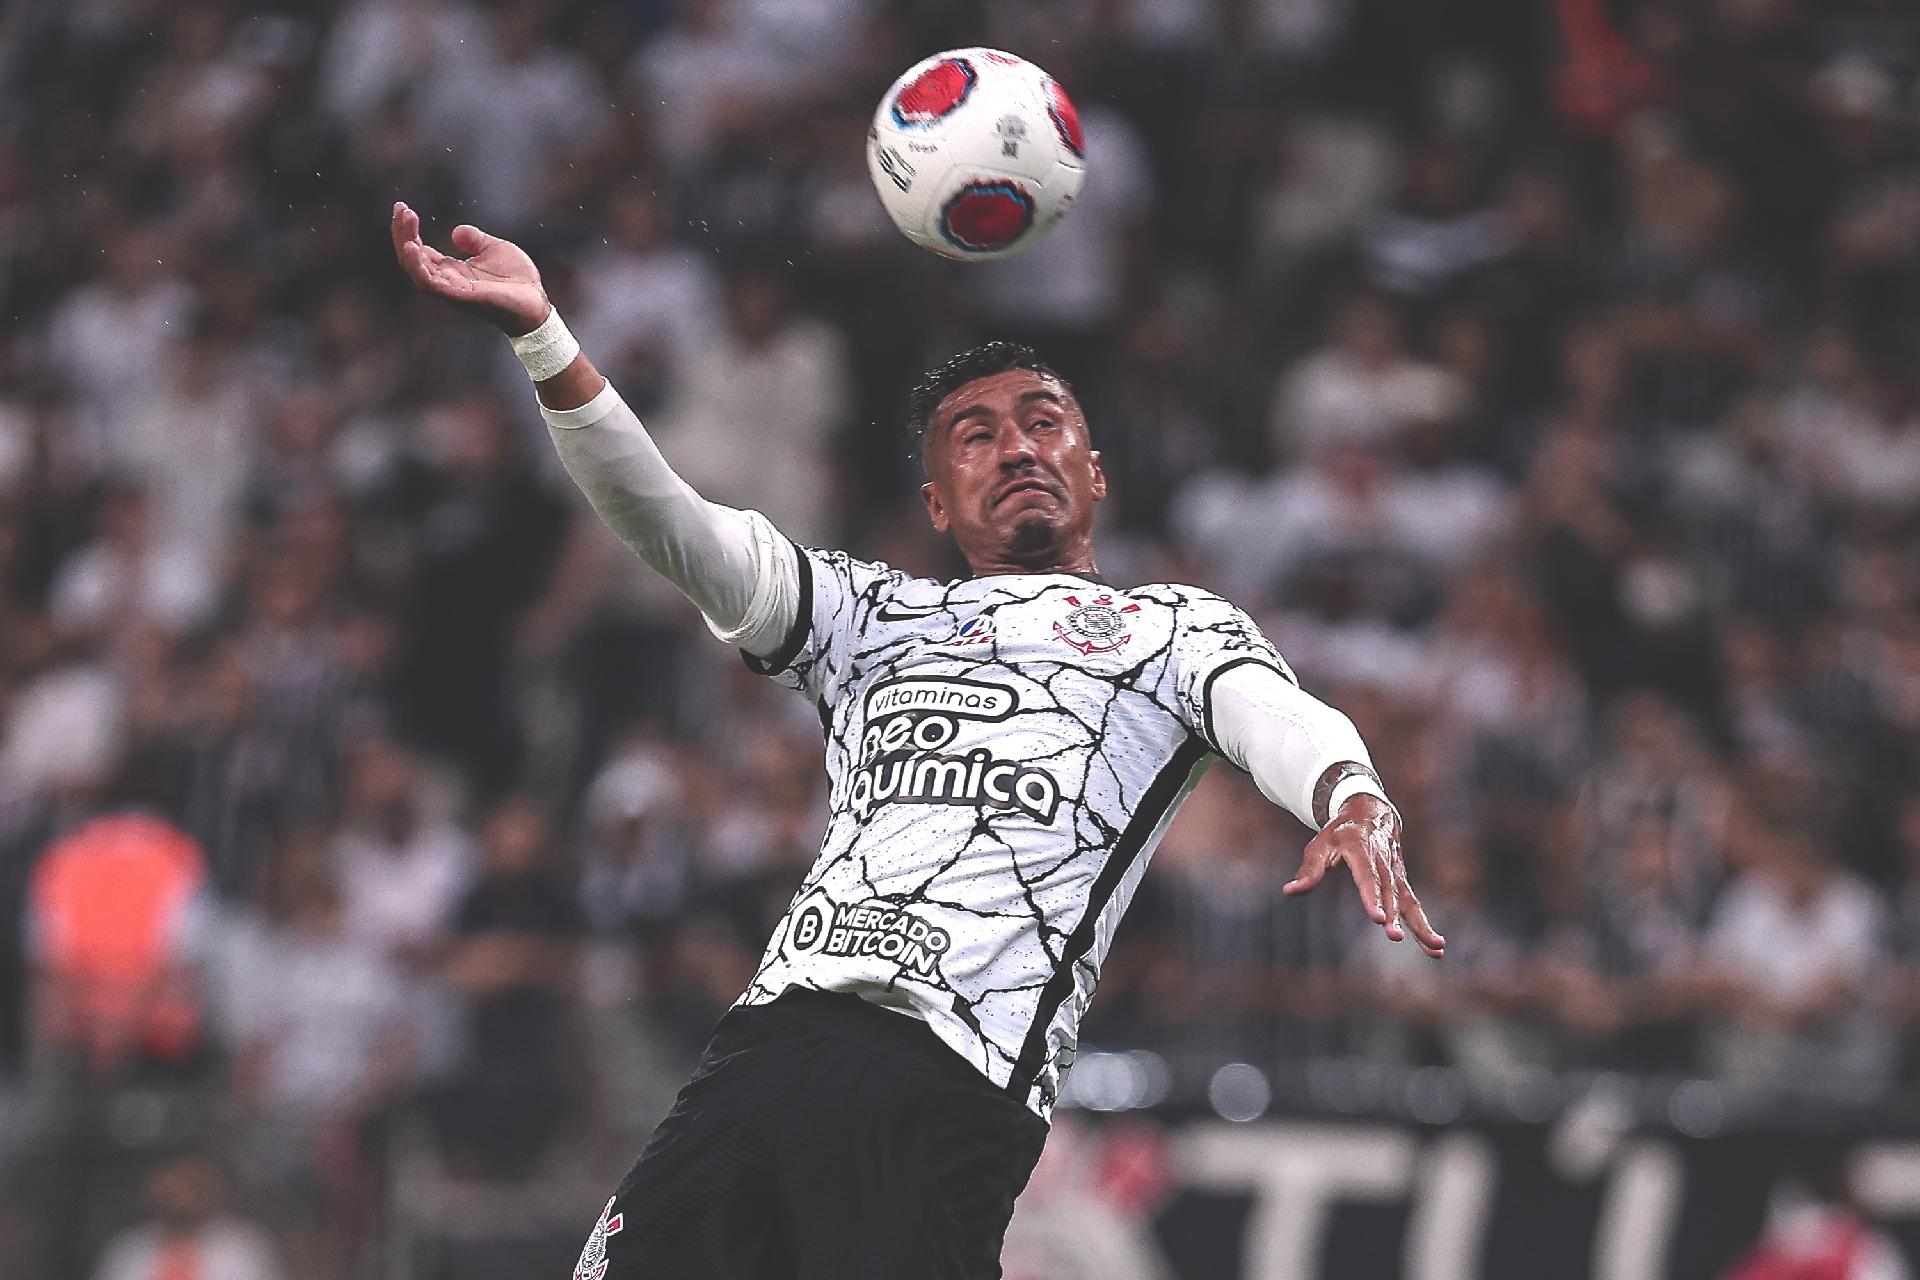 TNT Sports Brasil - Aquele ponto fraco do Corinthians